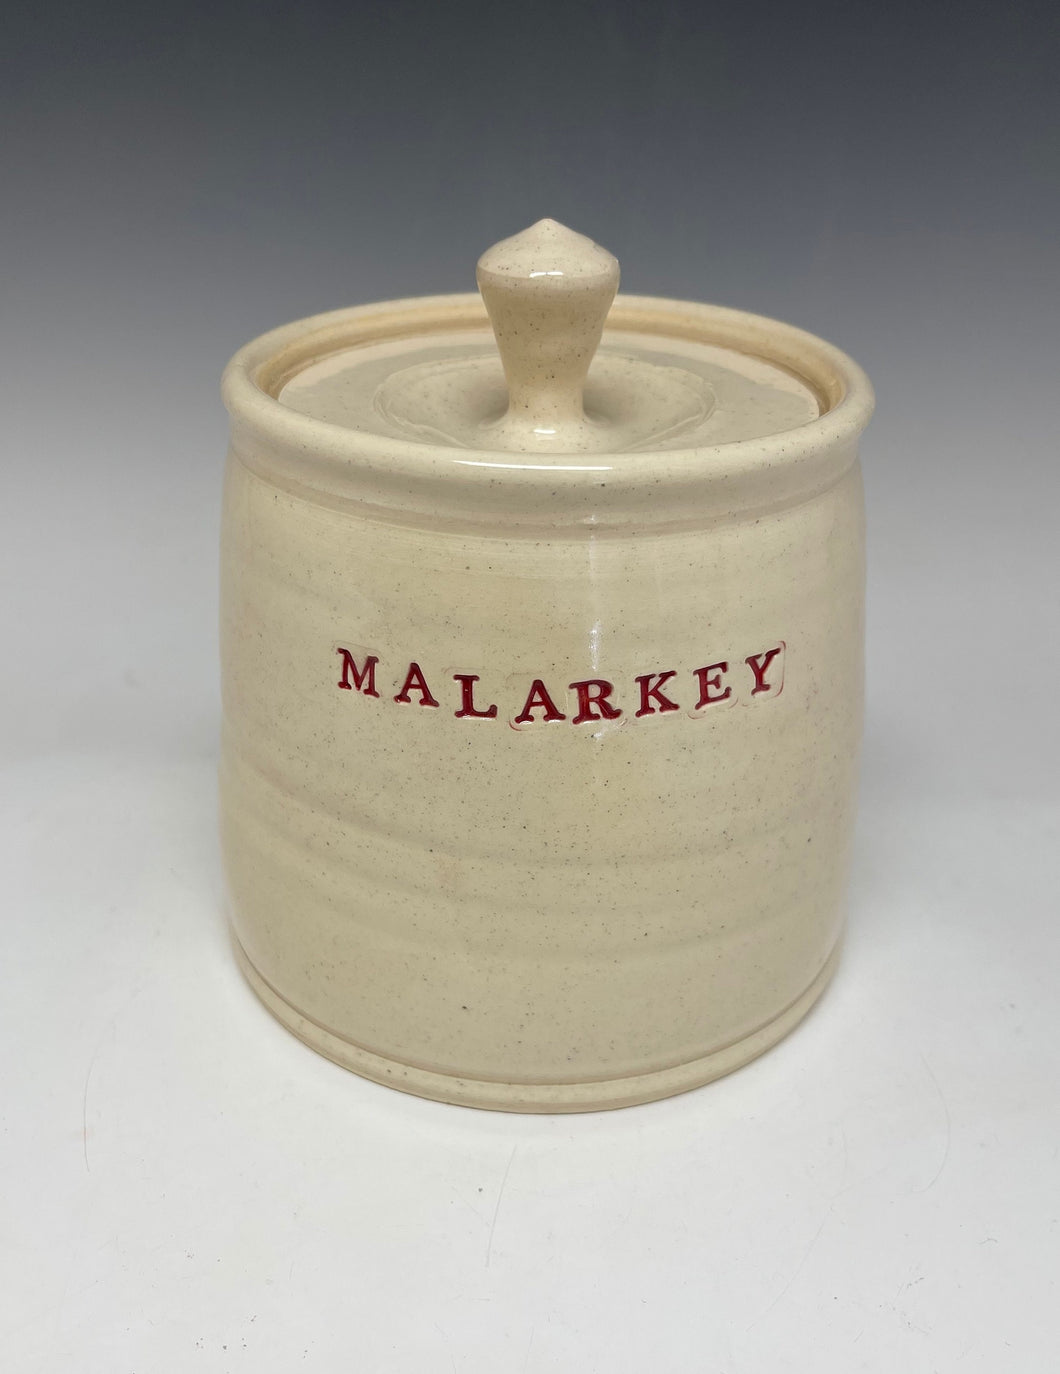 Malarkey Jar. for your Malarkey or just toothpicks, floss, dog treats, whatever...